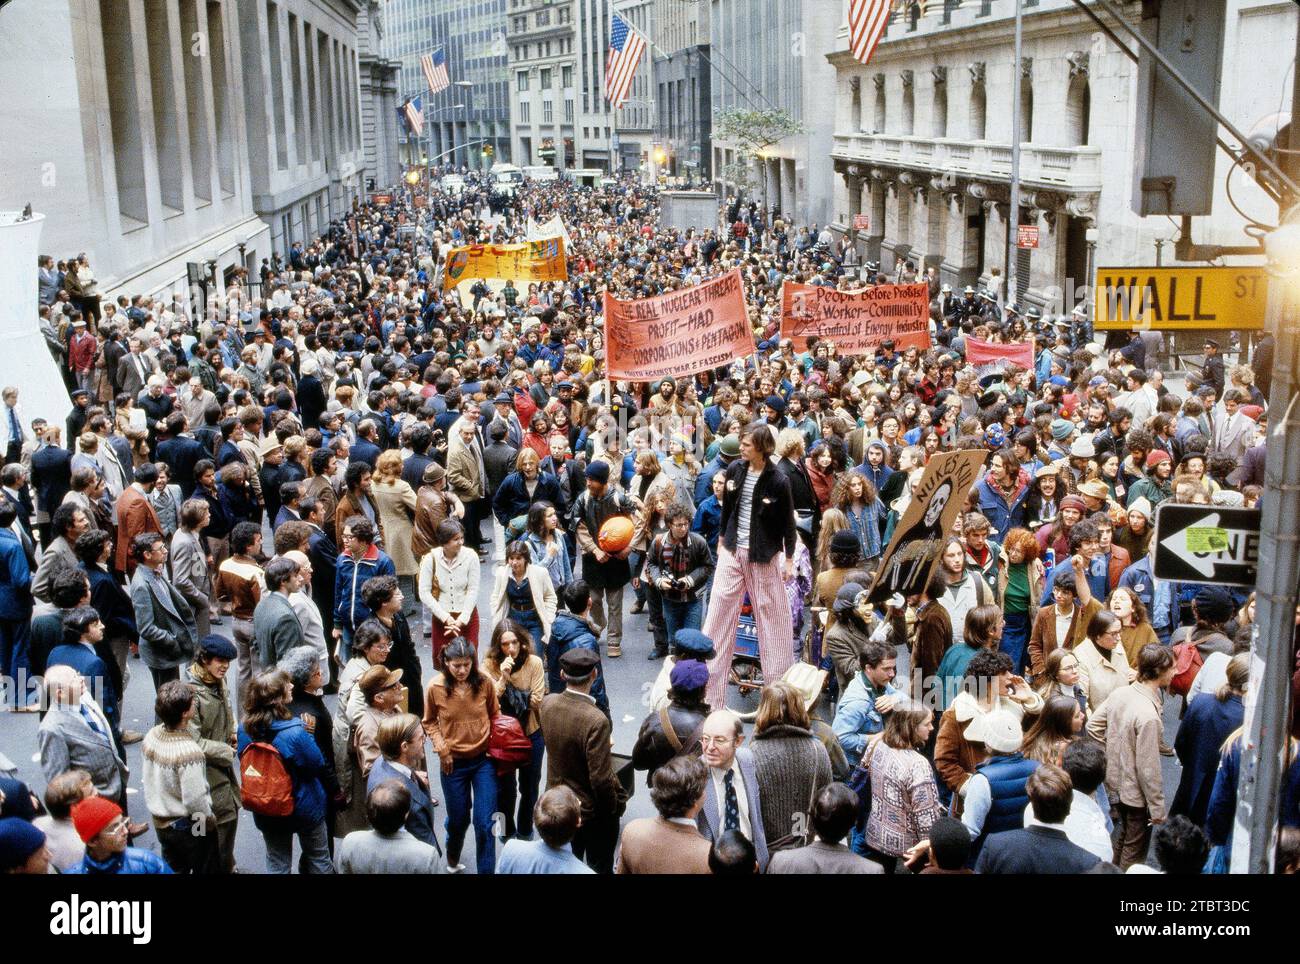 Crowd attending anti-nuclear protest, Wall Street, New York City, New York, USA, Bernard Gotfryd Collection, September 23, 1979 Stock Photo